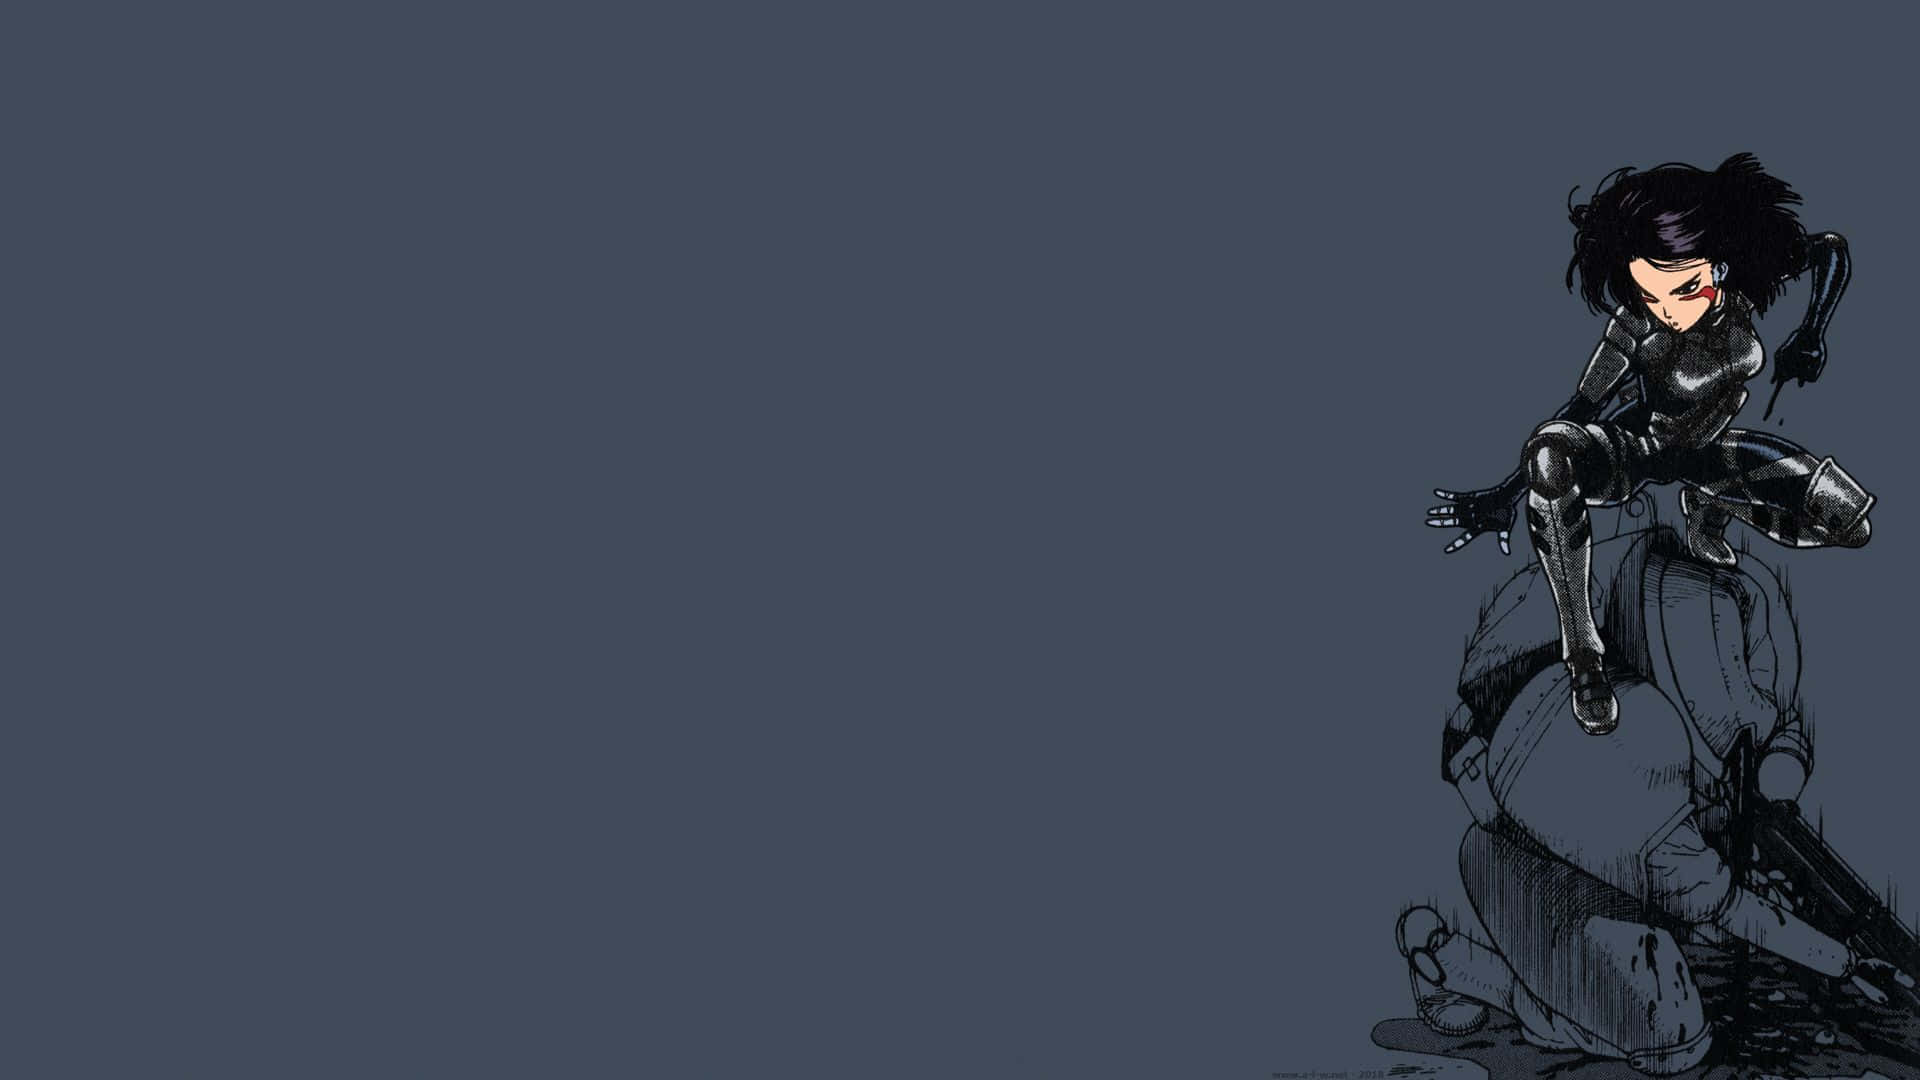 An Adorable Dark Anime Character Wallpaper